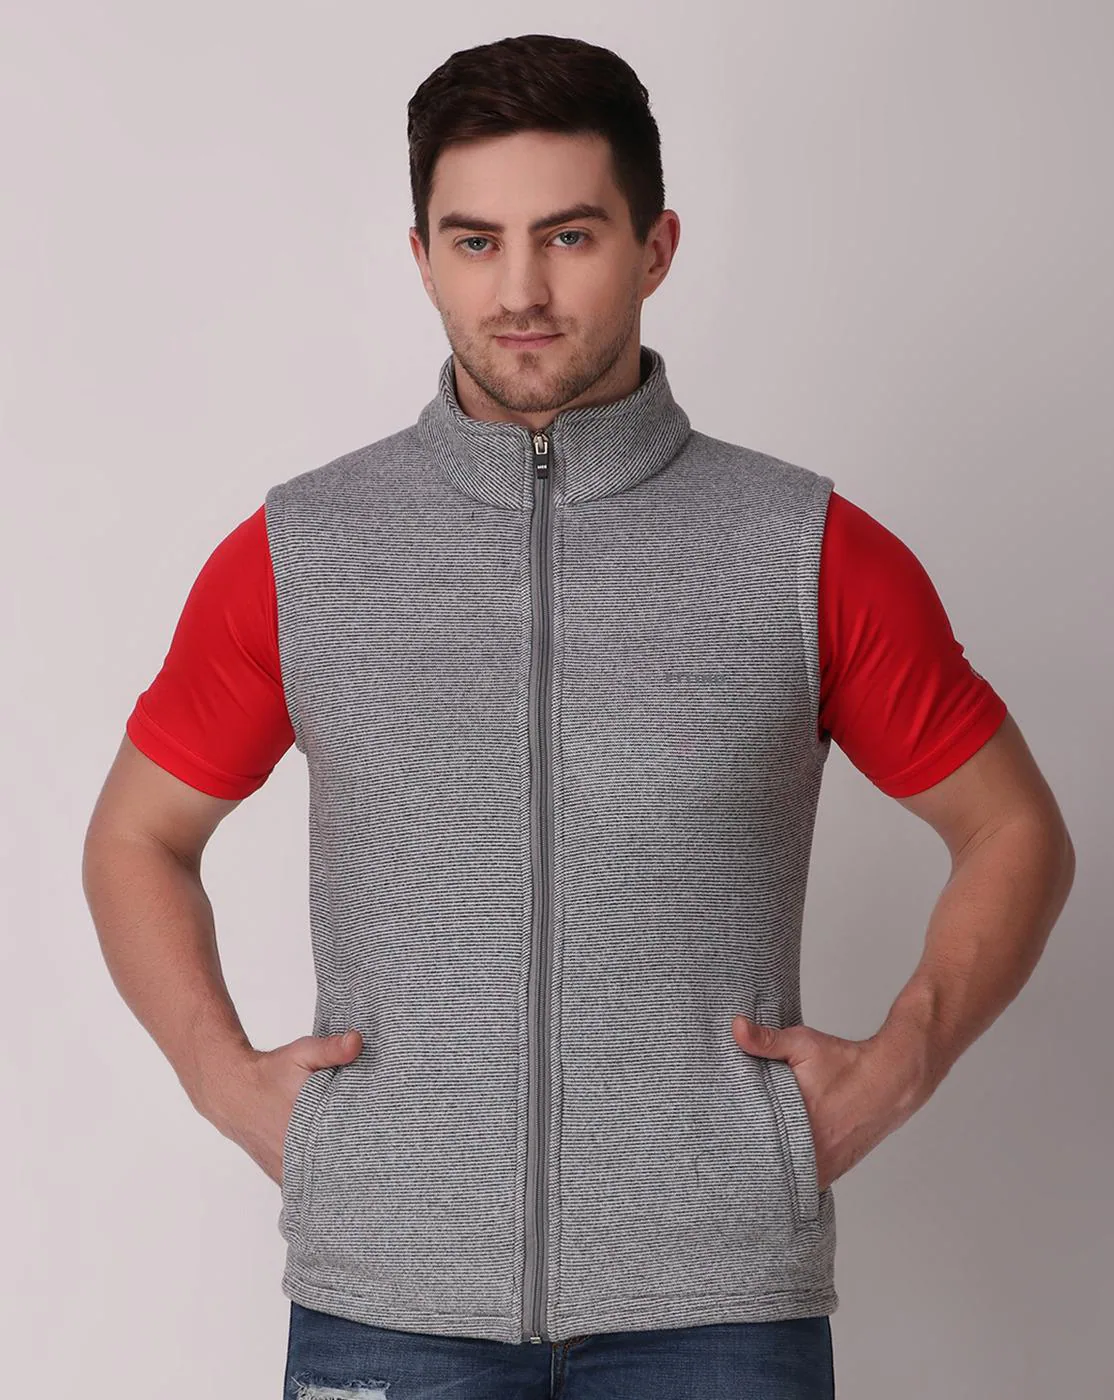 Buy FITINC Light Grey Men's Fleece Half Sleeves Melange Jacket